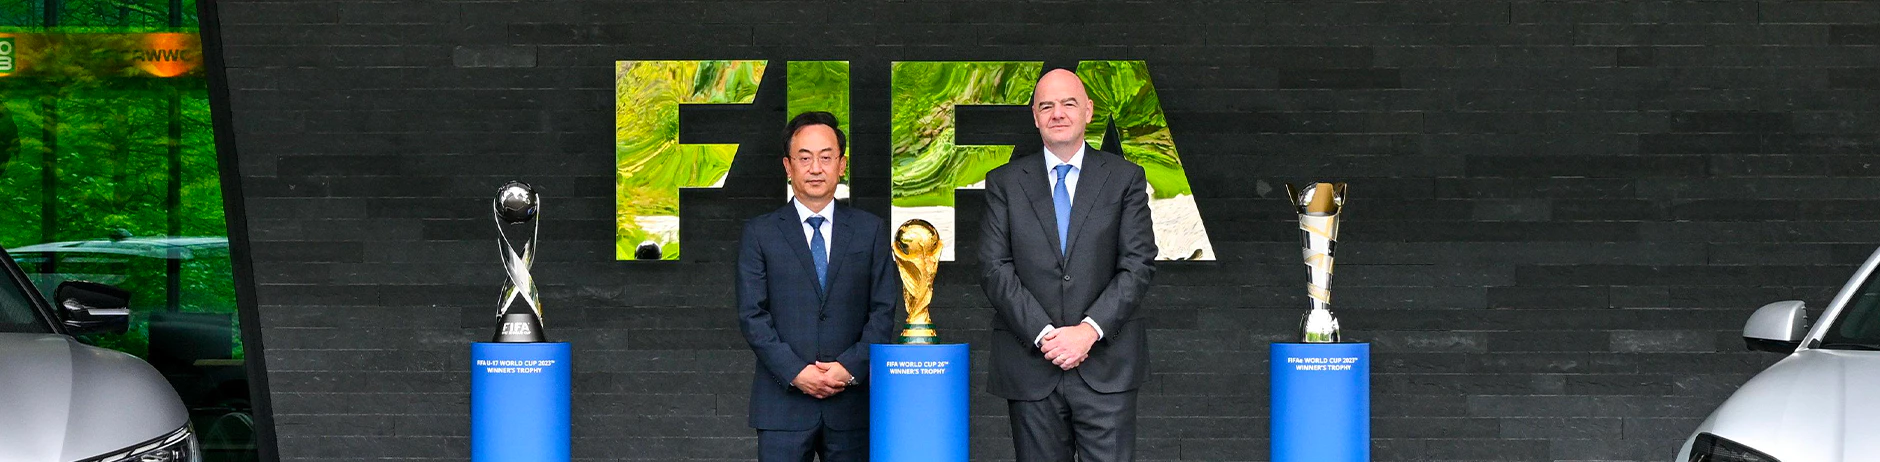 Partenariat FIFA